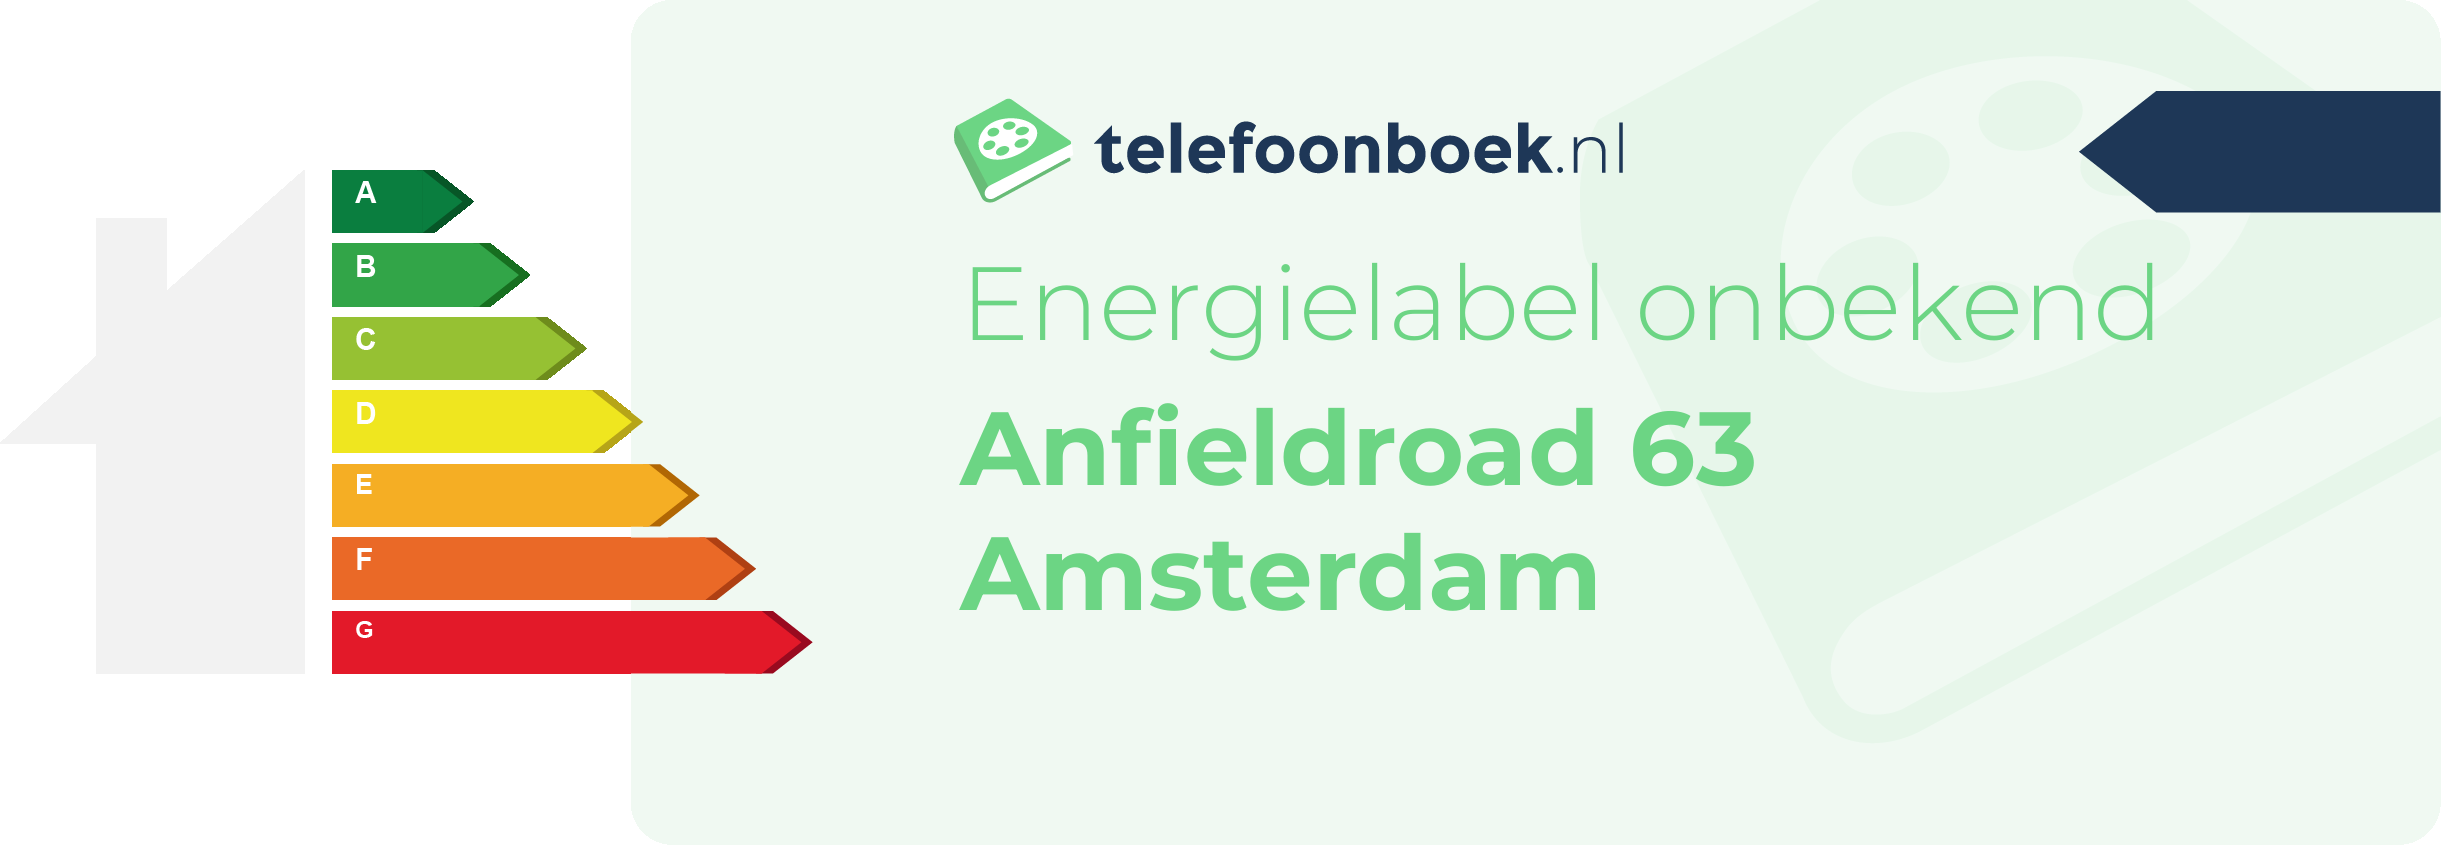 Energielabel Anfieldroad 63 Amsterdam